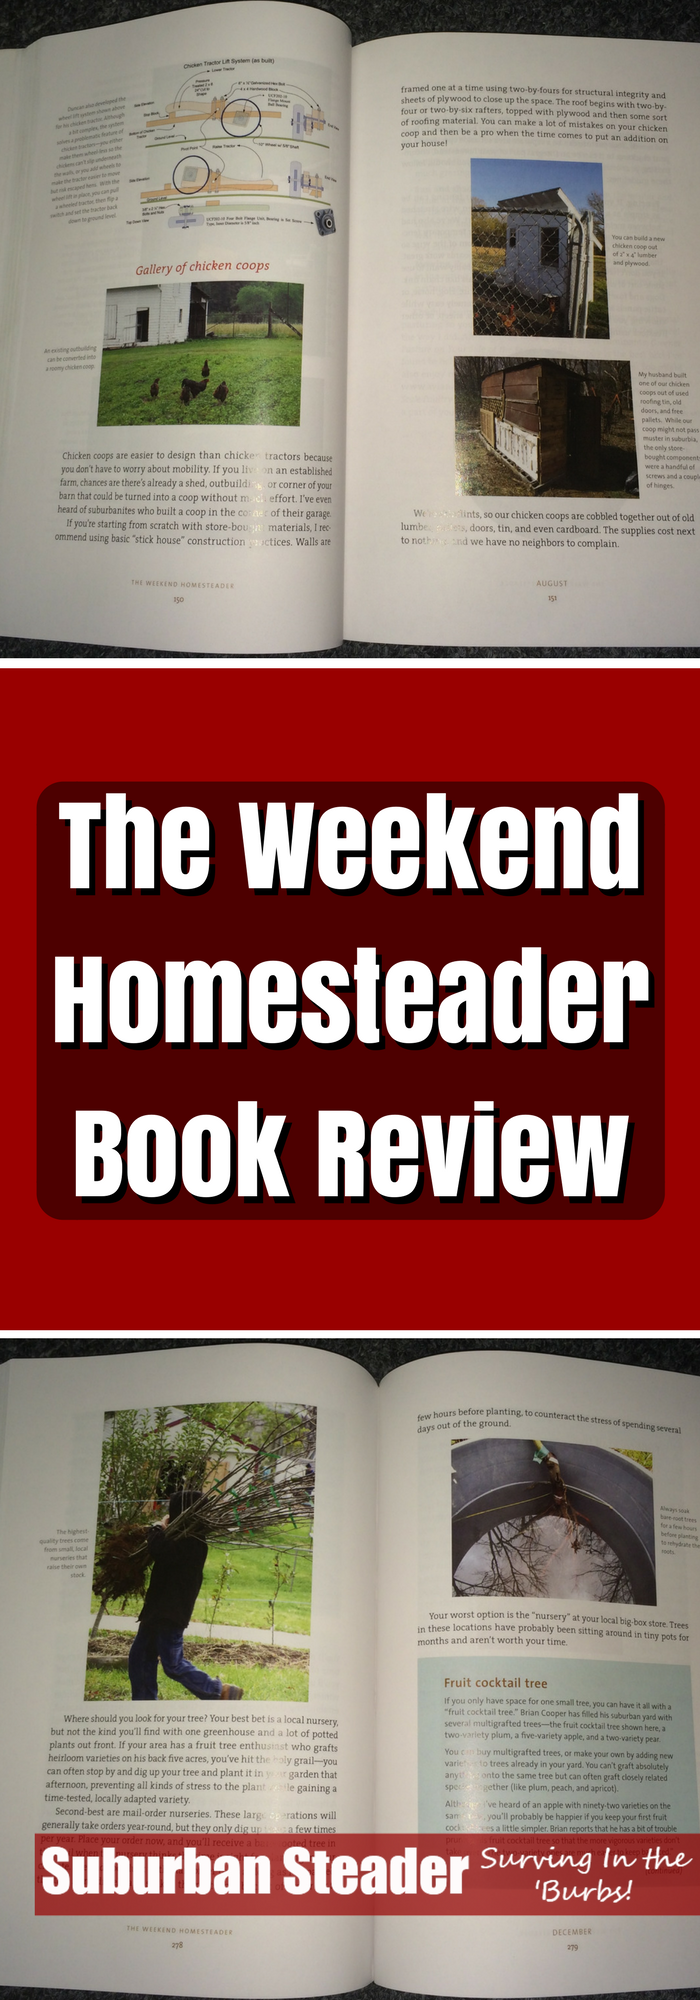 The Weekend Homesteader